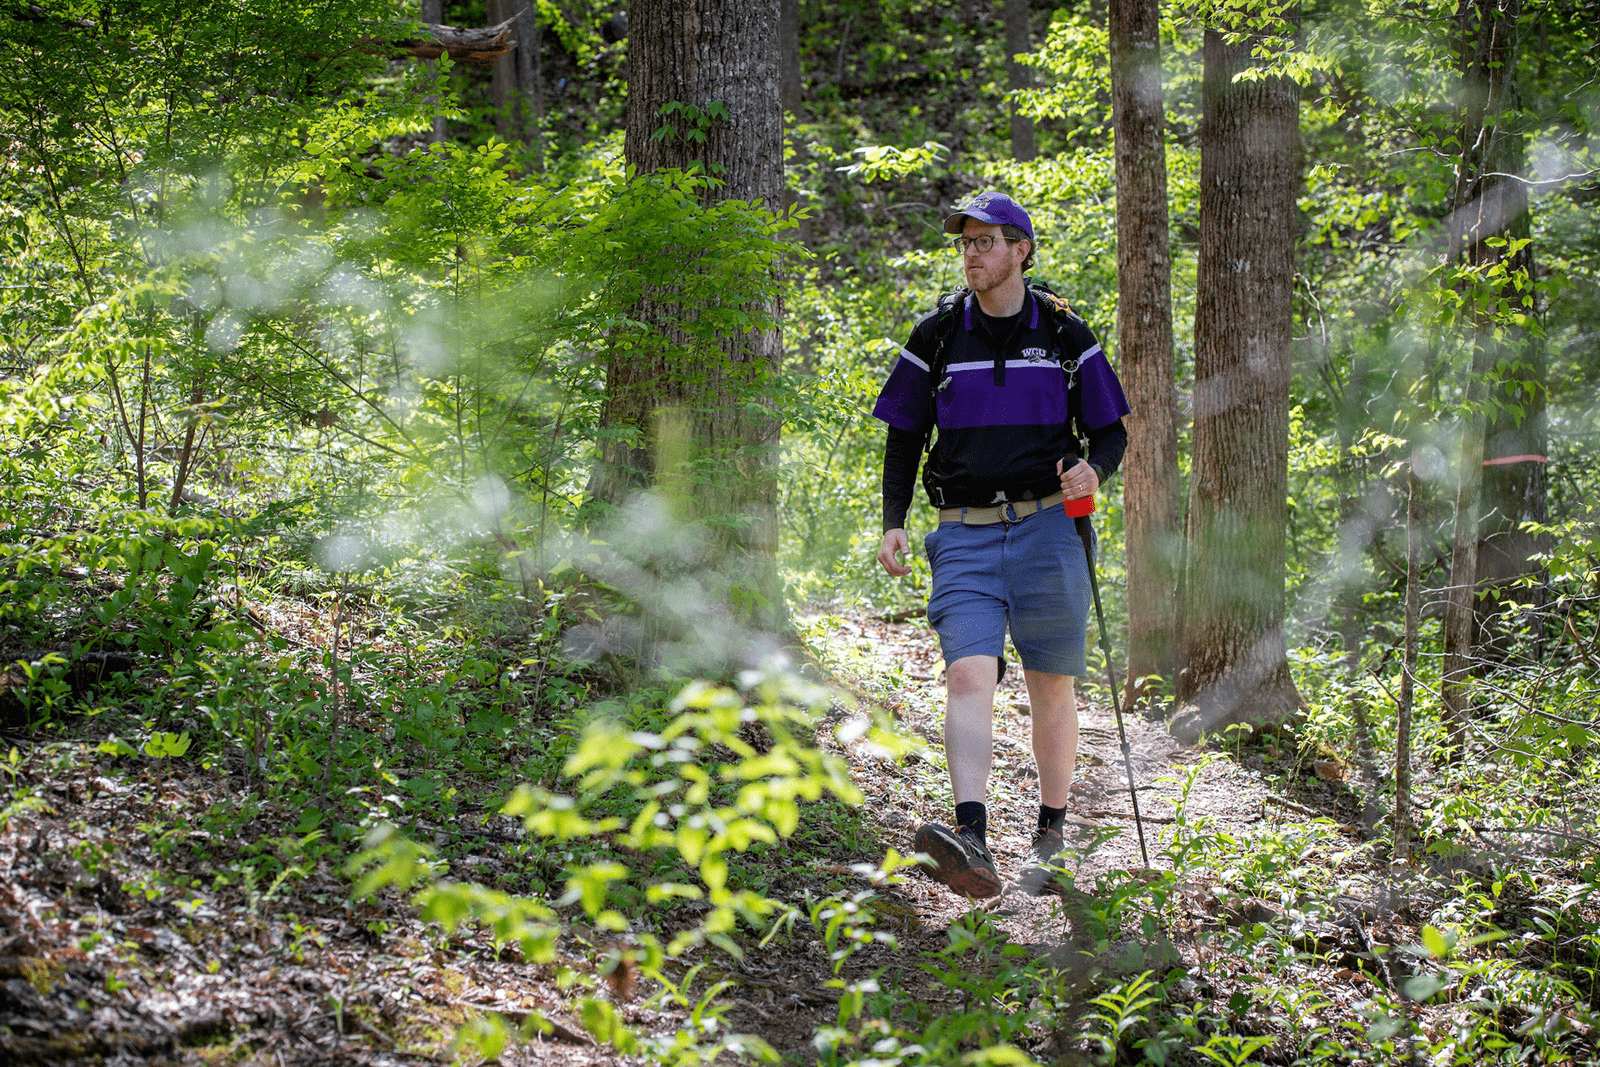 Hiking sticks Mushroom Hunting Supplies Accessories